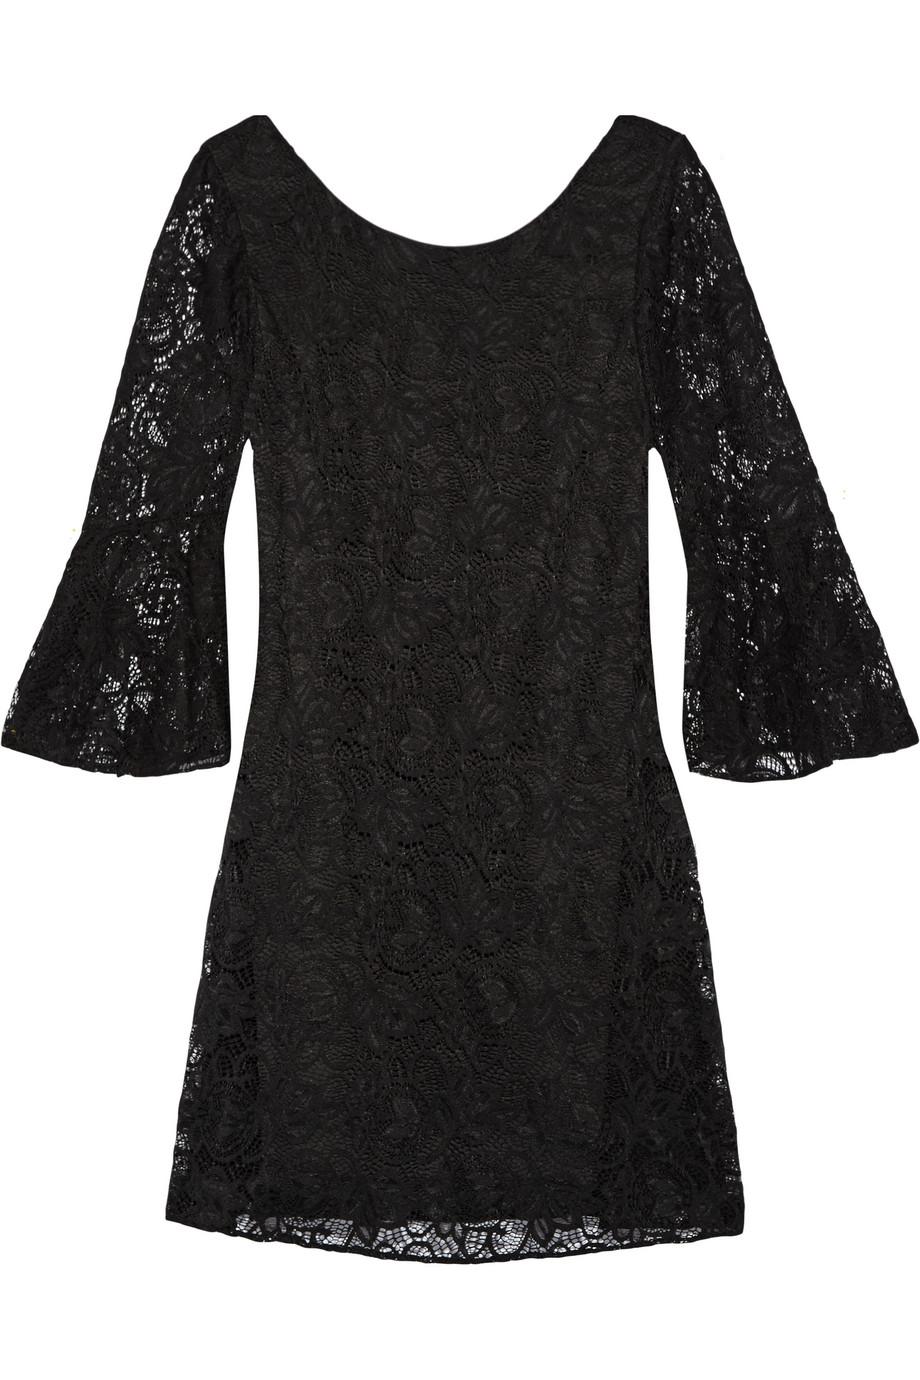 BADGLEY MISCHKA Cutout Lace Dress in Black | ModeSens